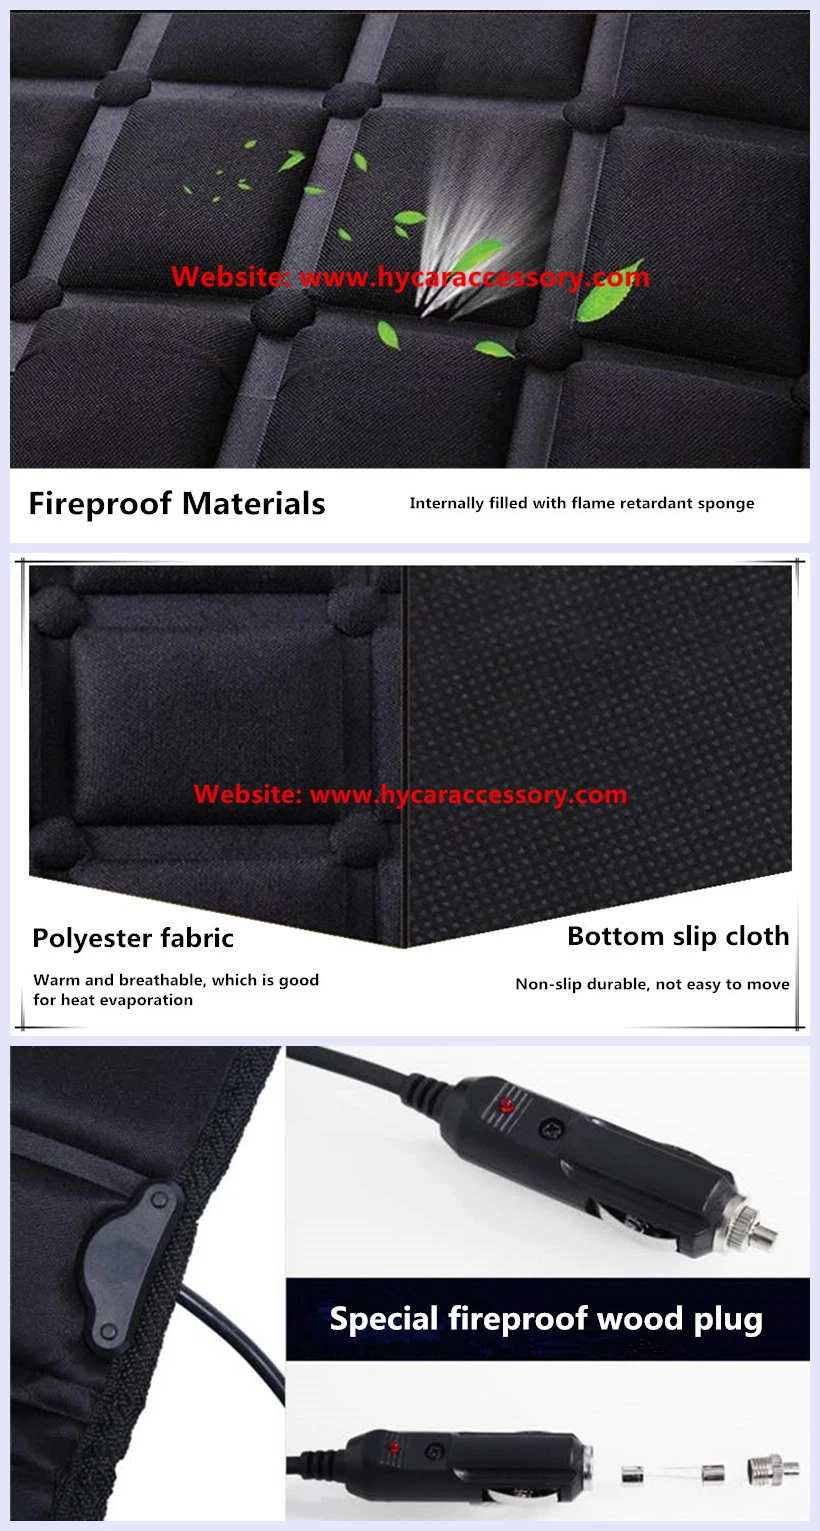 Wholesale 12V Fireproof Cigarette Lighter Universal Car Heating Mat